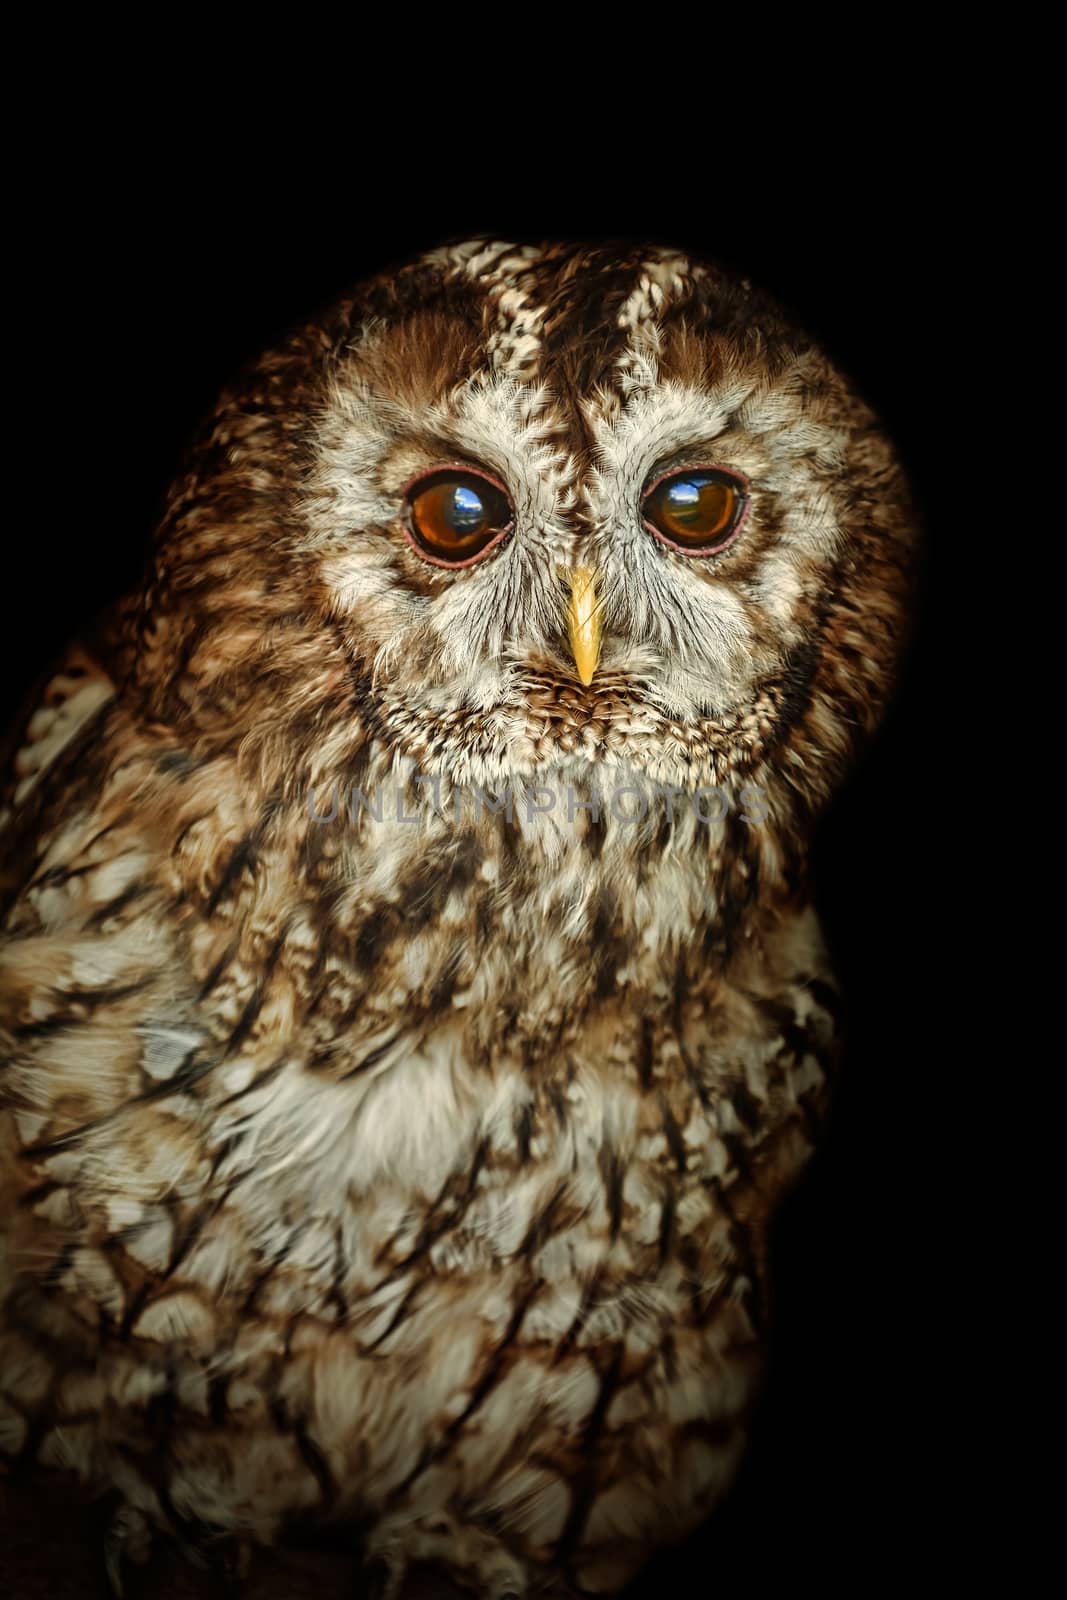 Tawny owl or brown owl (Strix aluco) by SNR